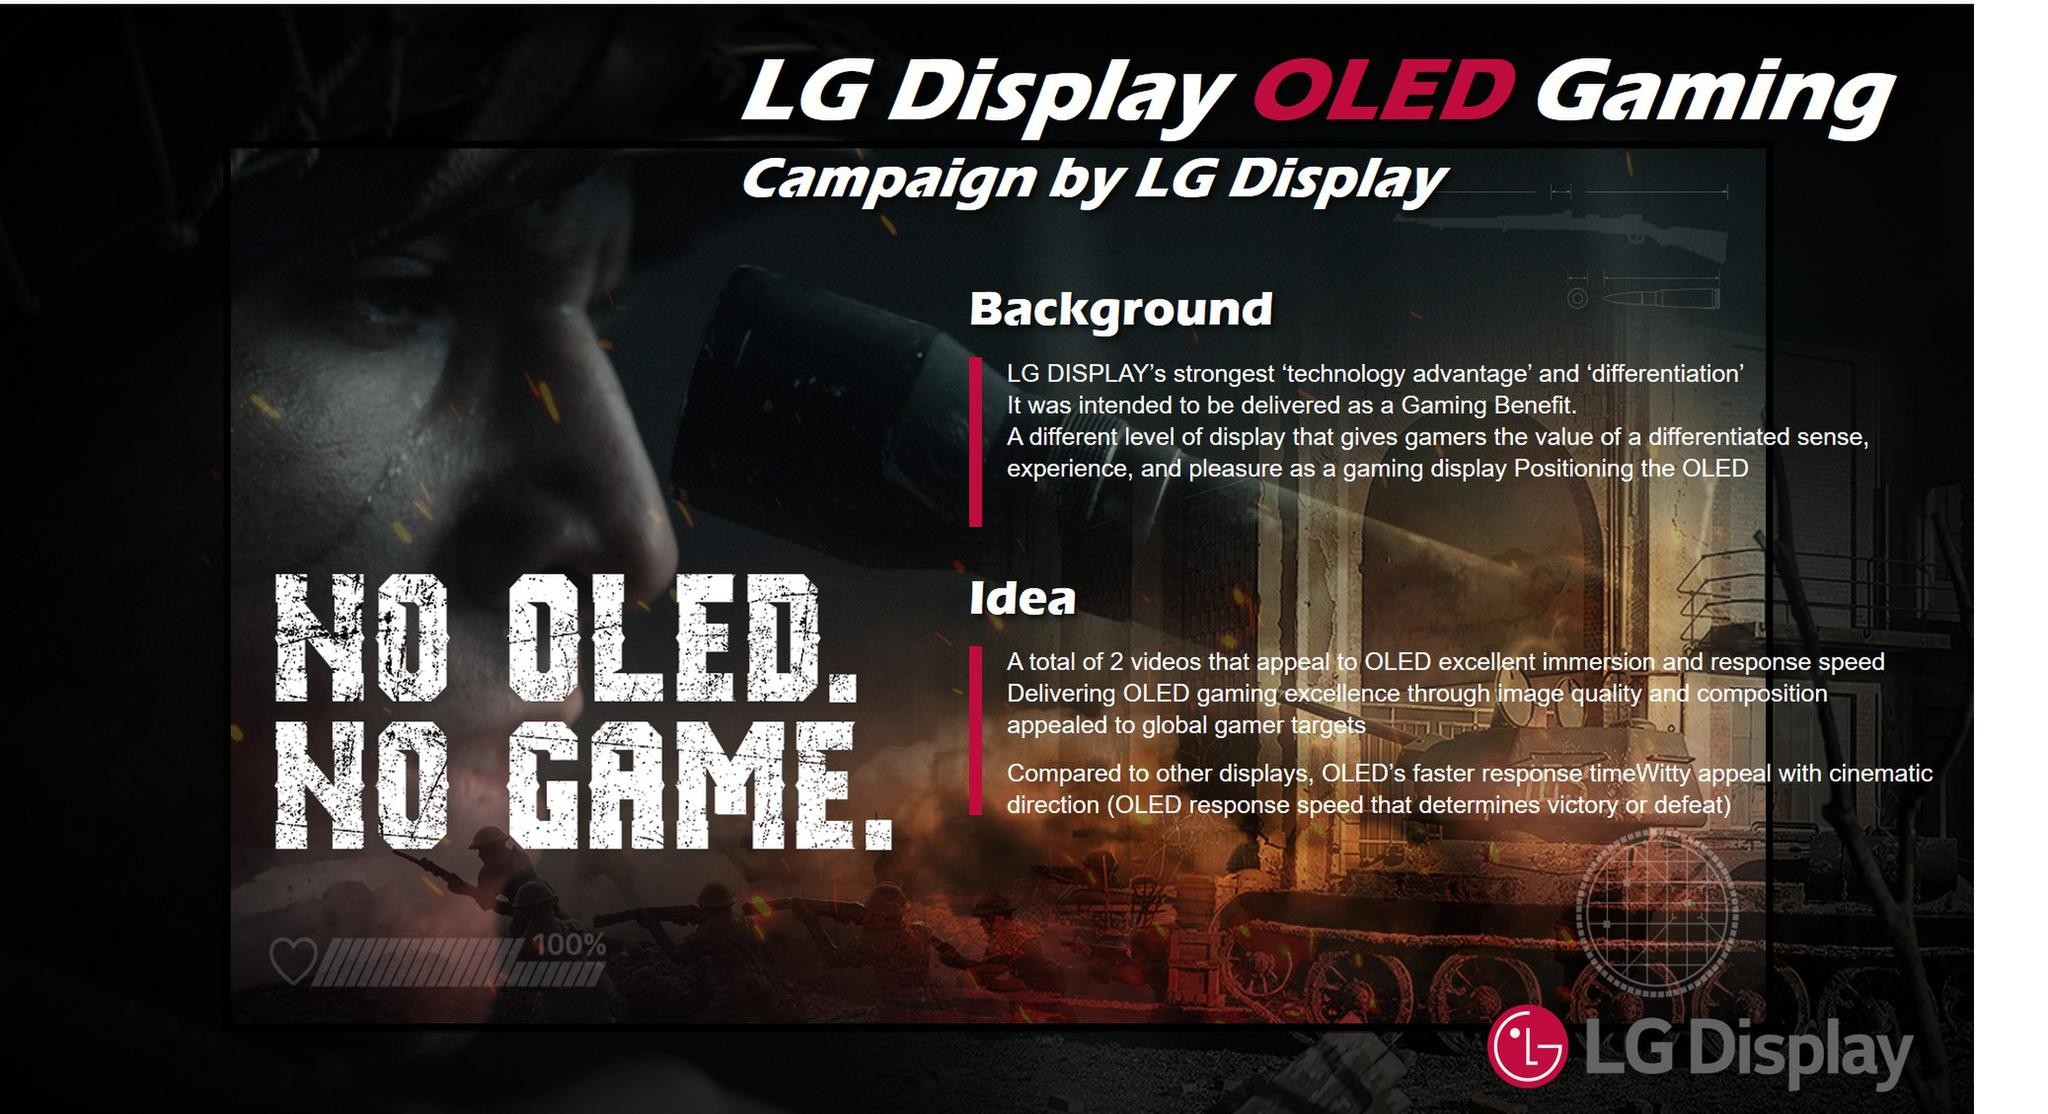 LG Display OLED Gaming Ad